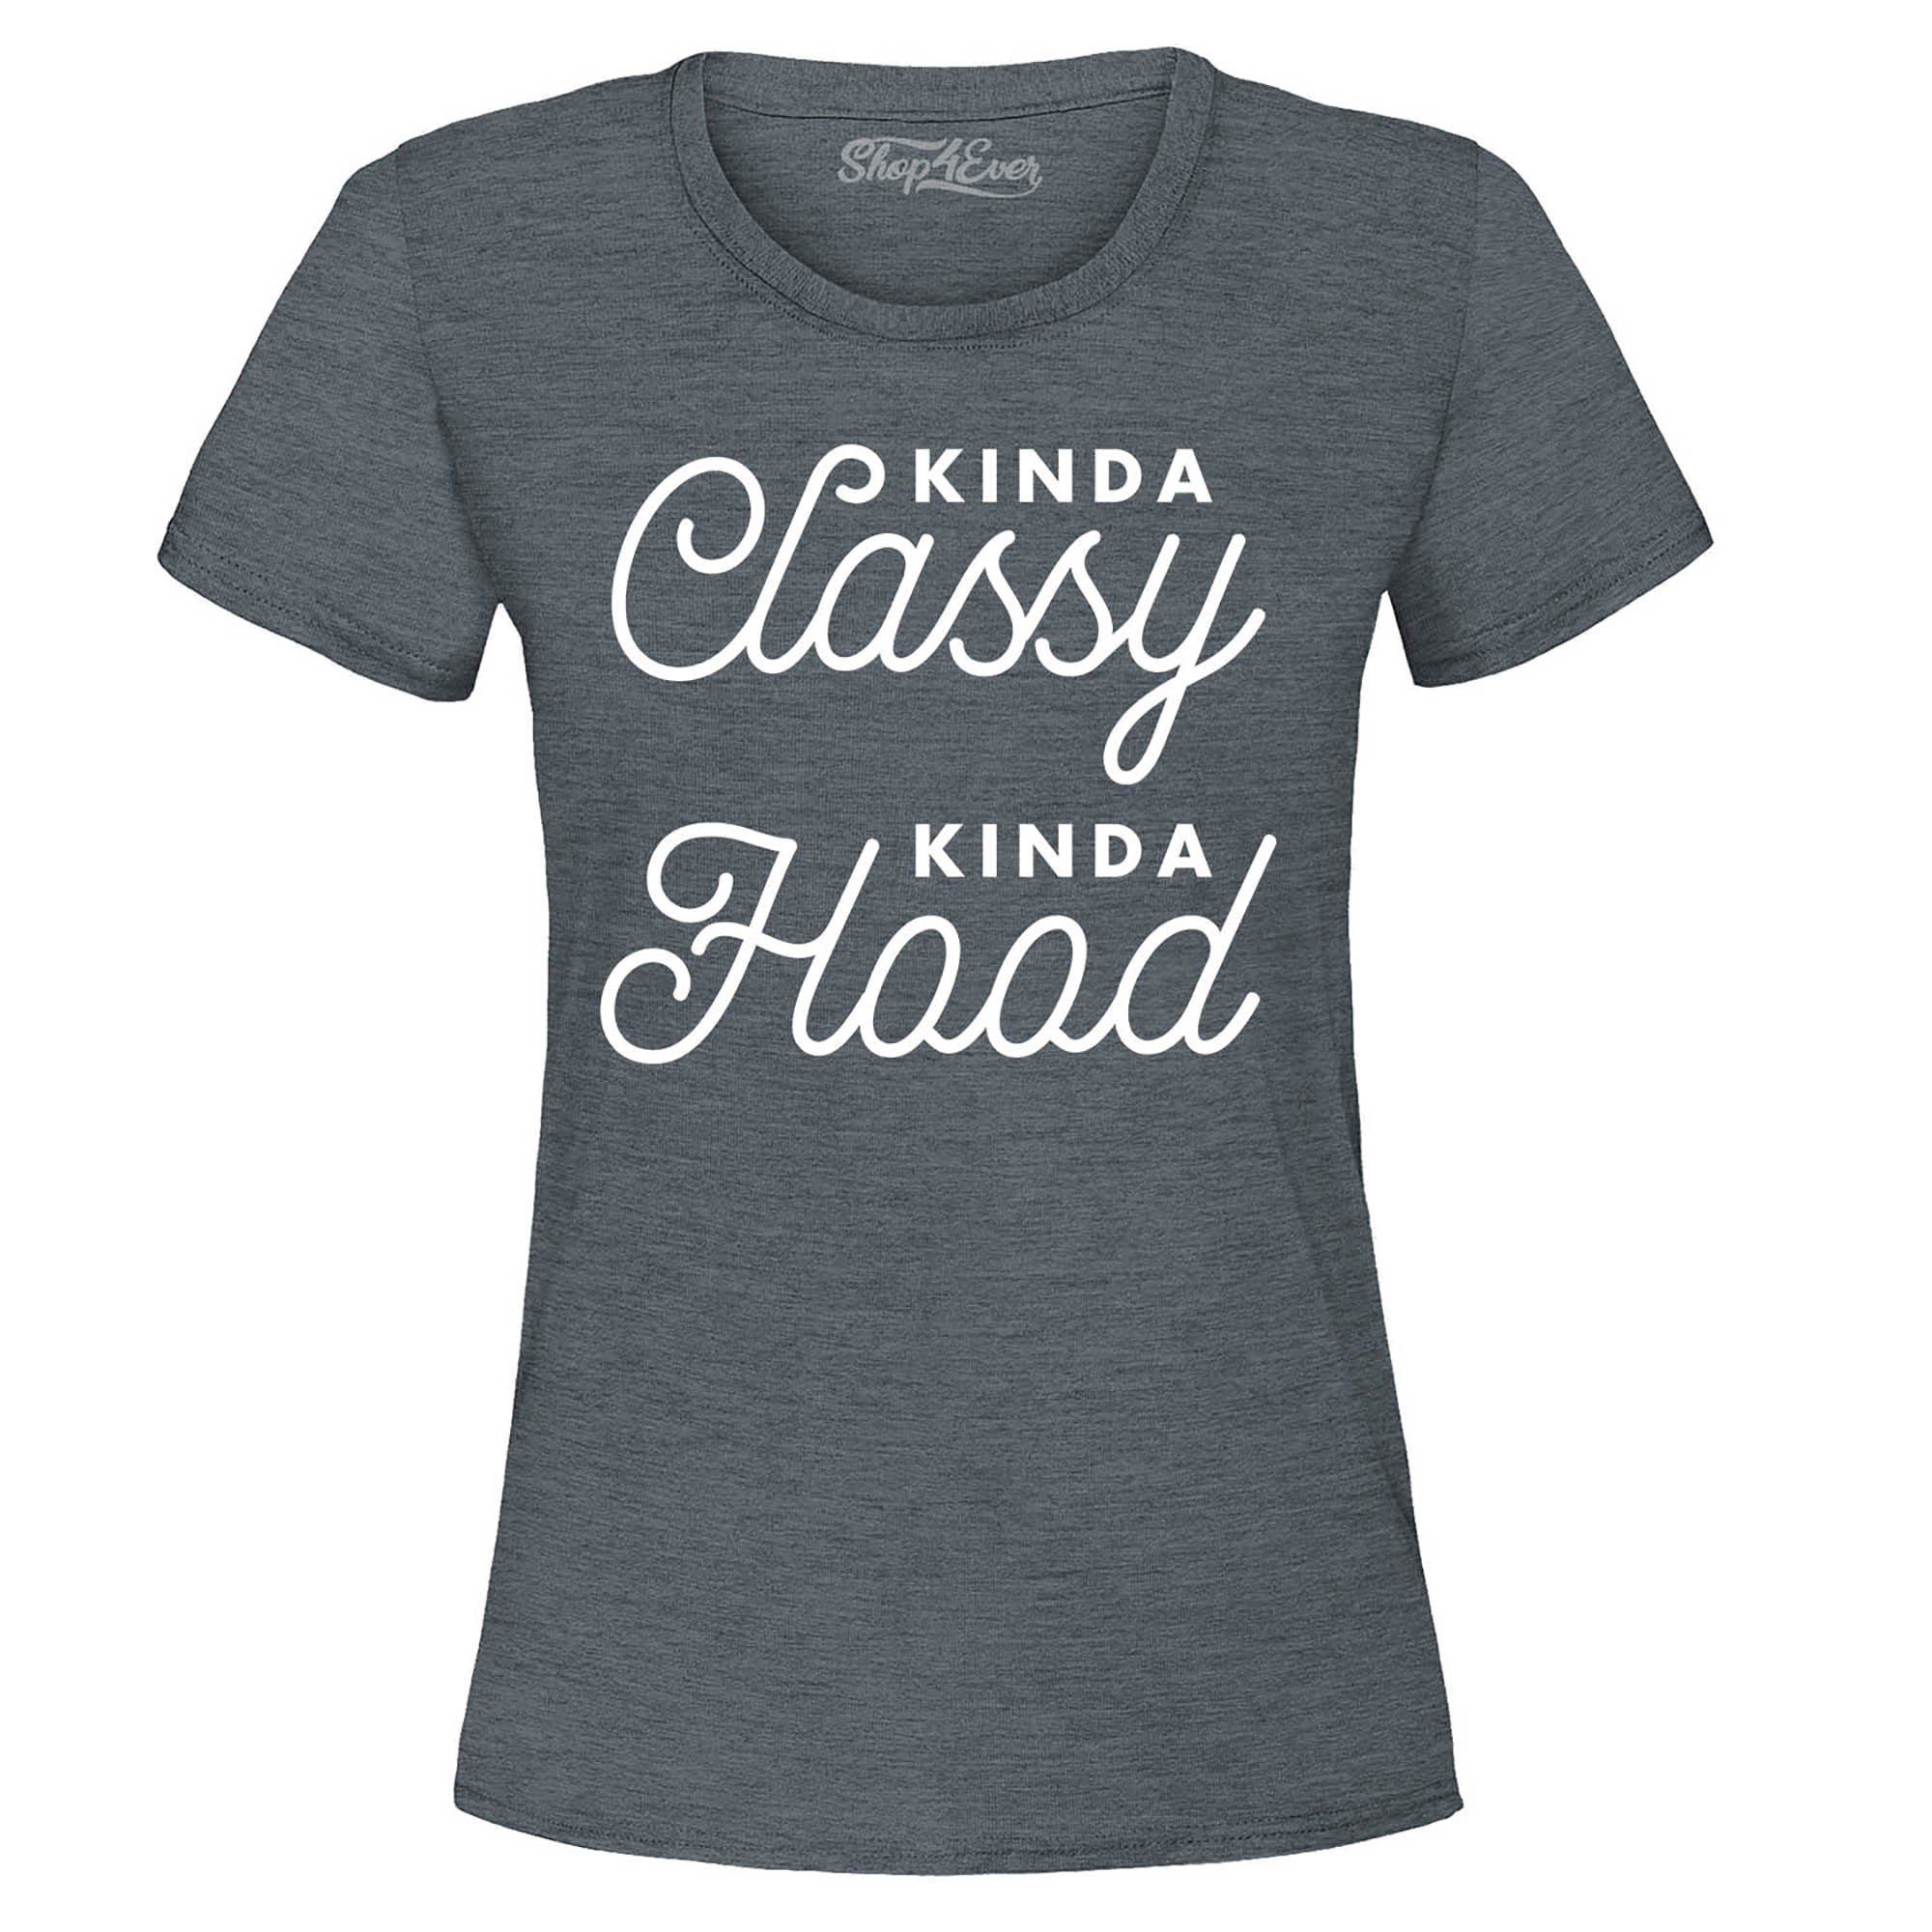 Kinda Classy Kinda Hood Women's T-Shirt